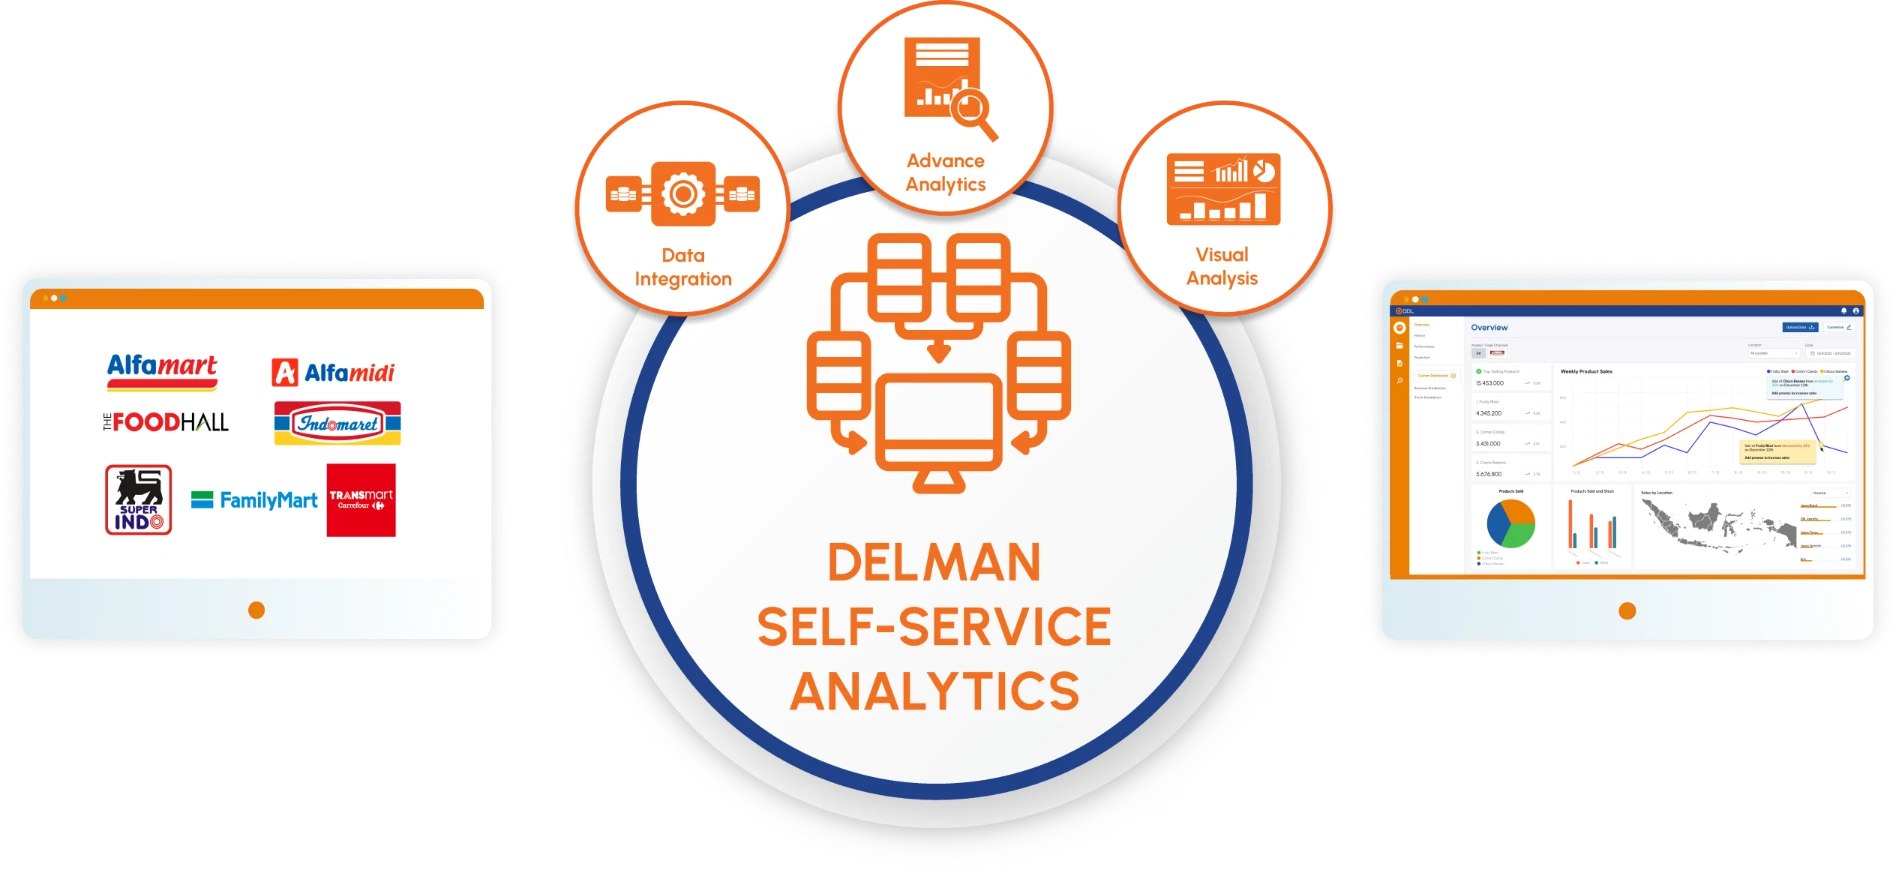 delman self-service analytics reporting dashboard